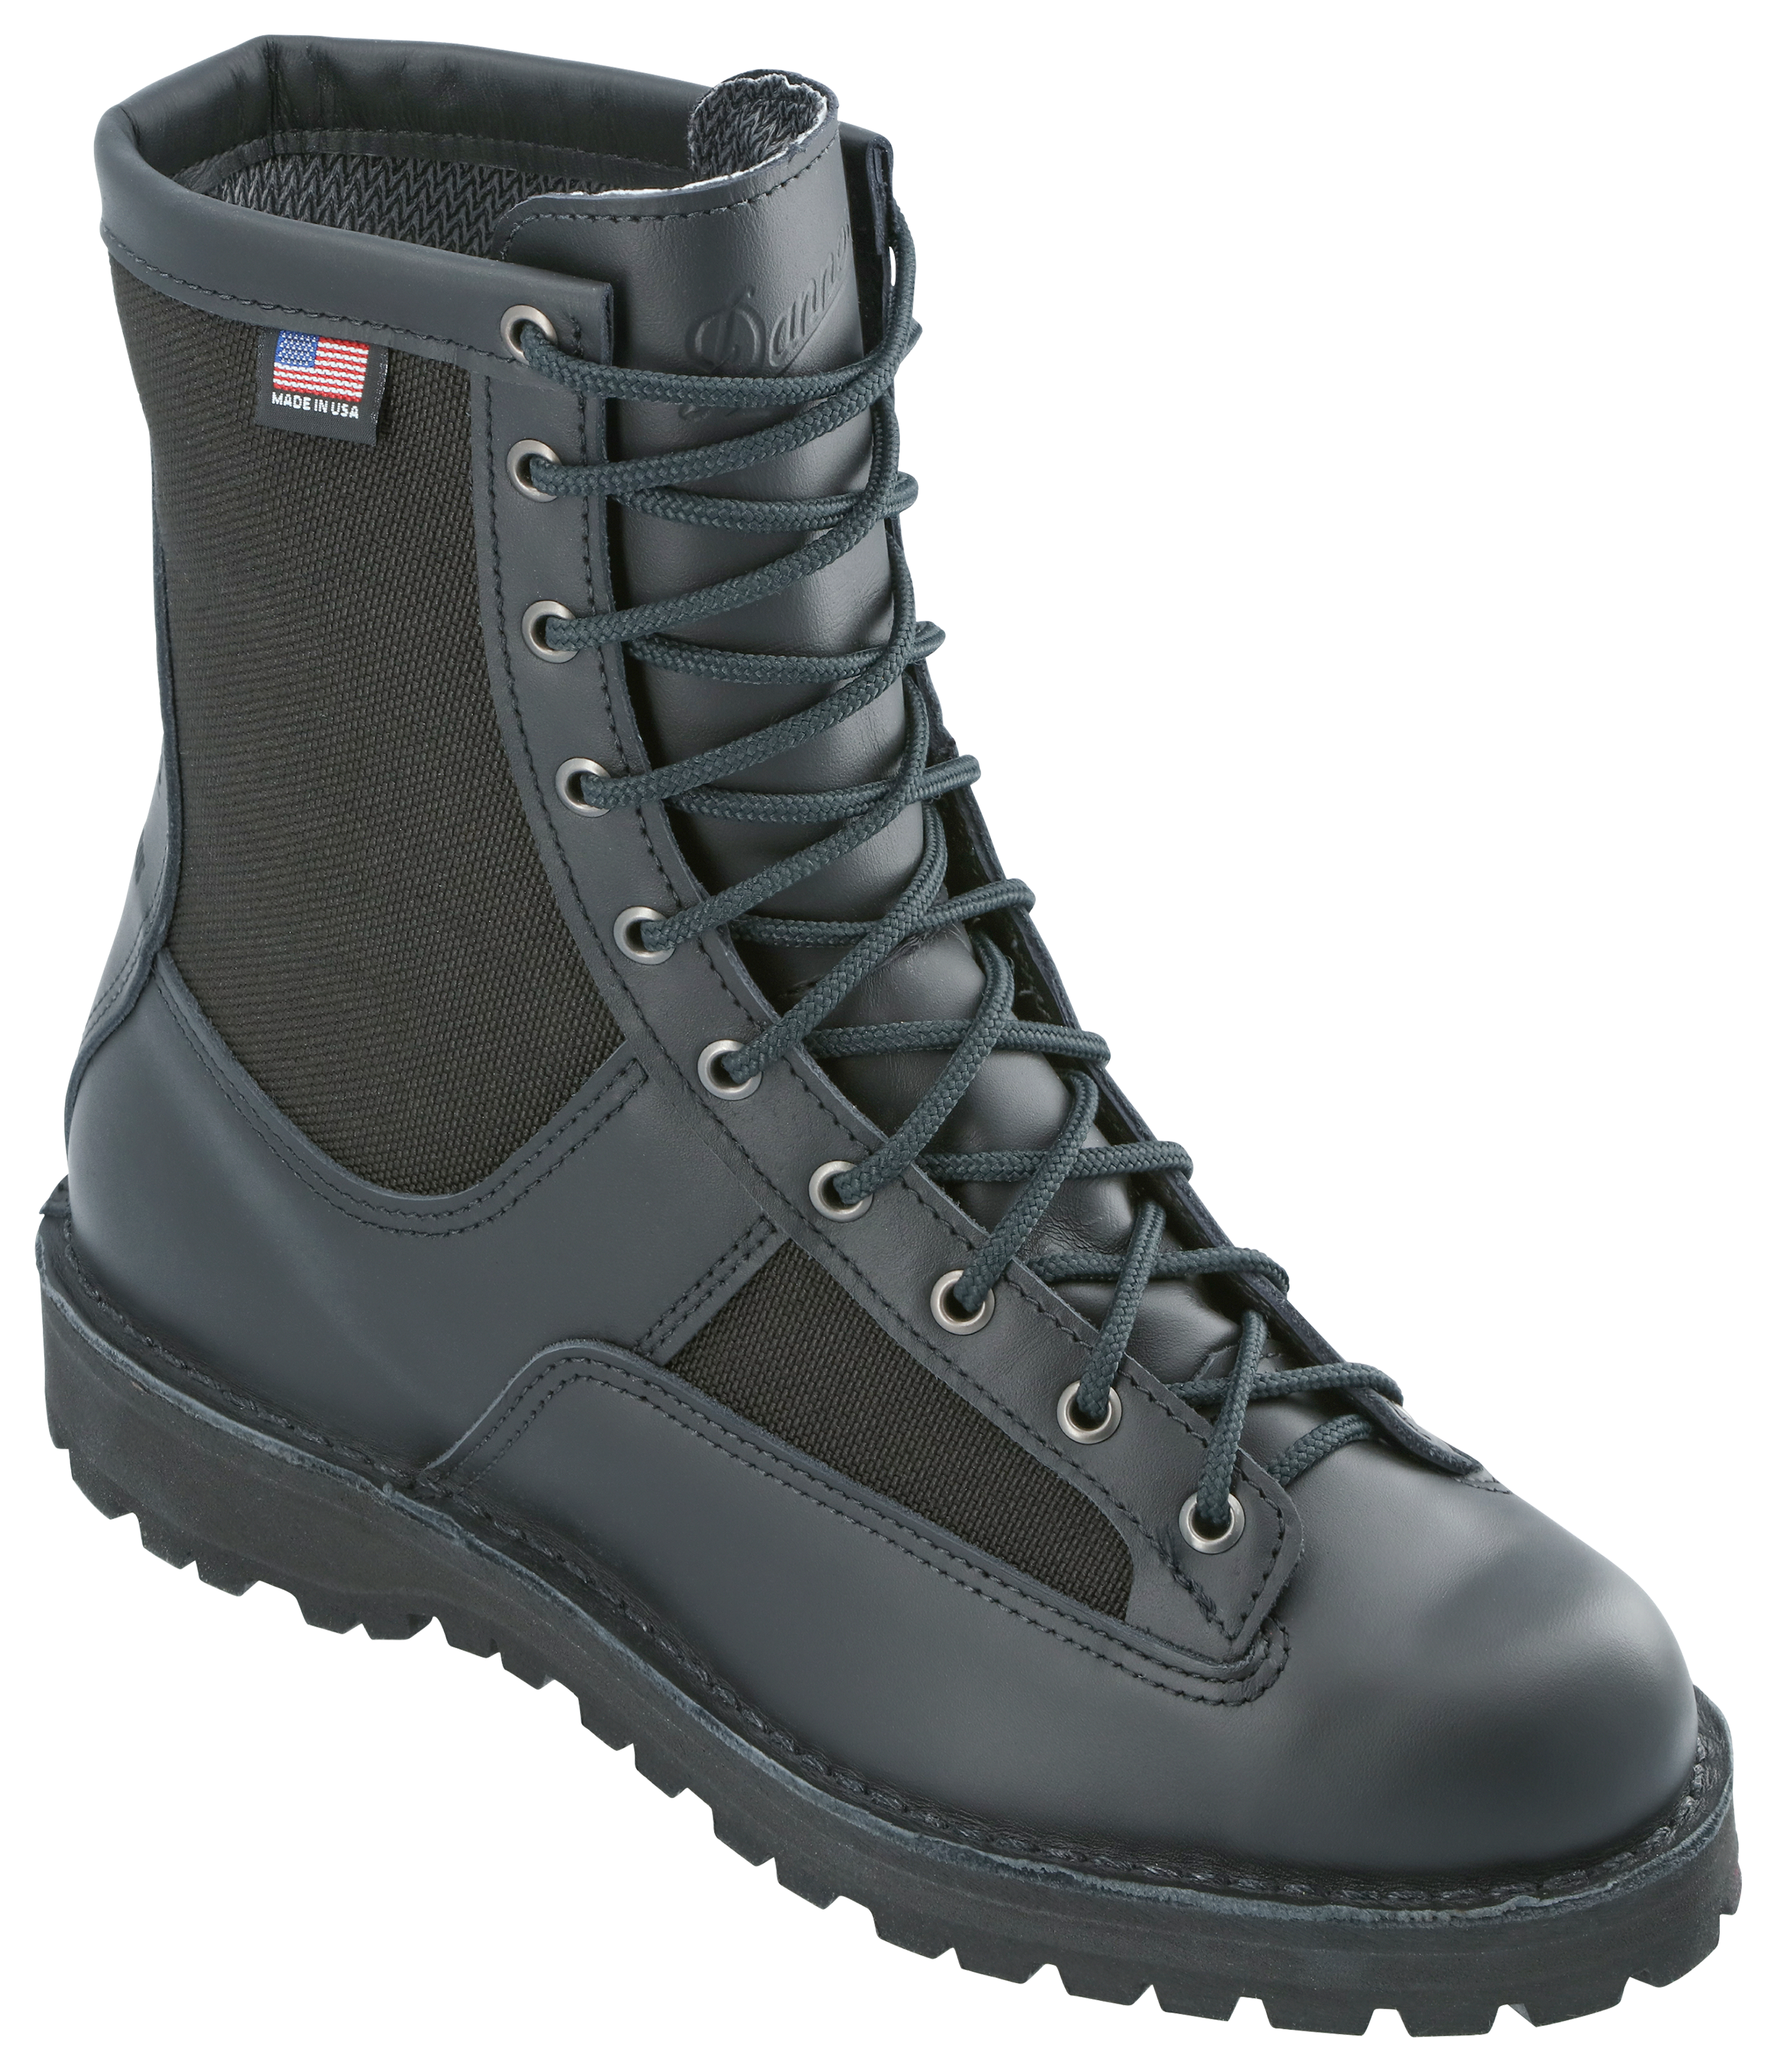 Danner Acadia GORE-TEX Duty Boots for Men - Black - 13M